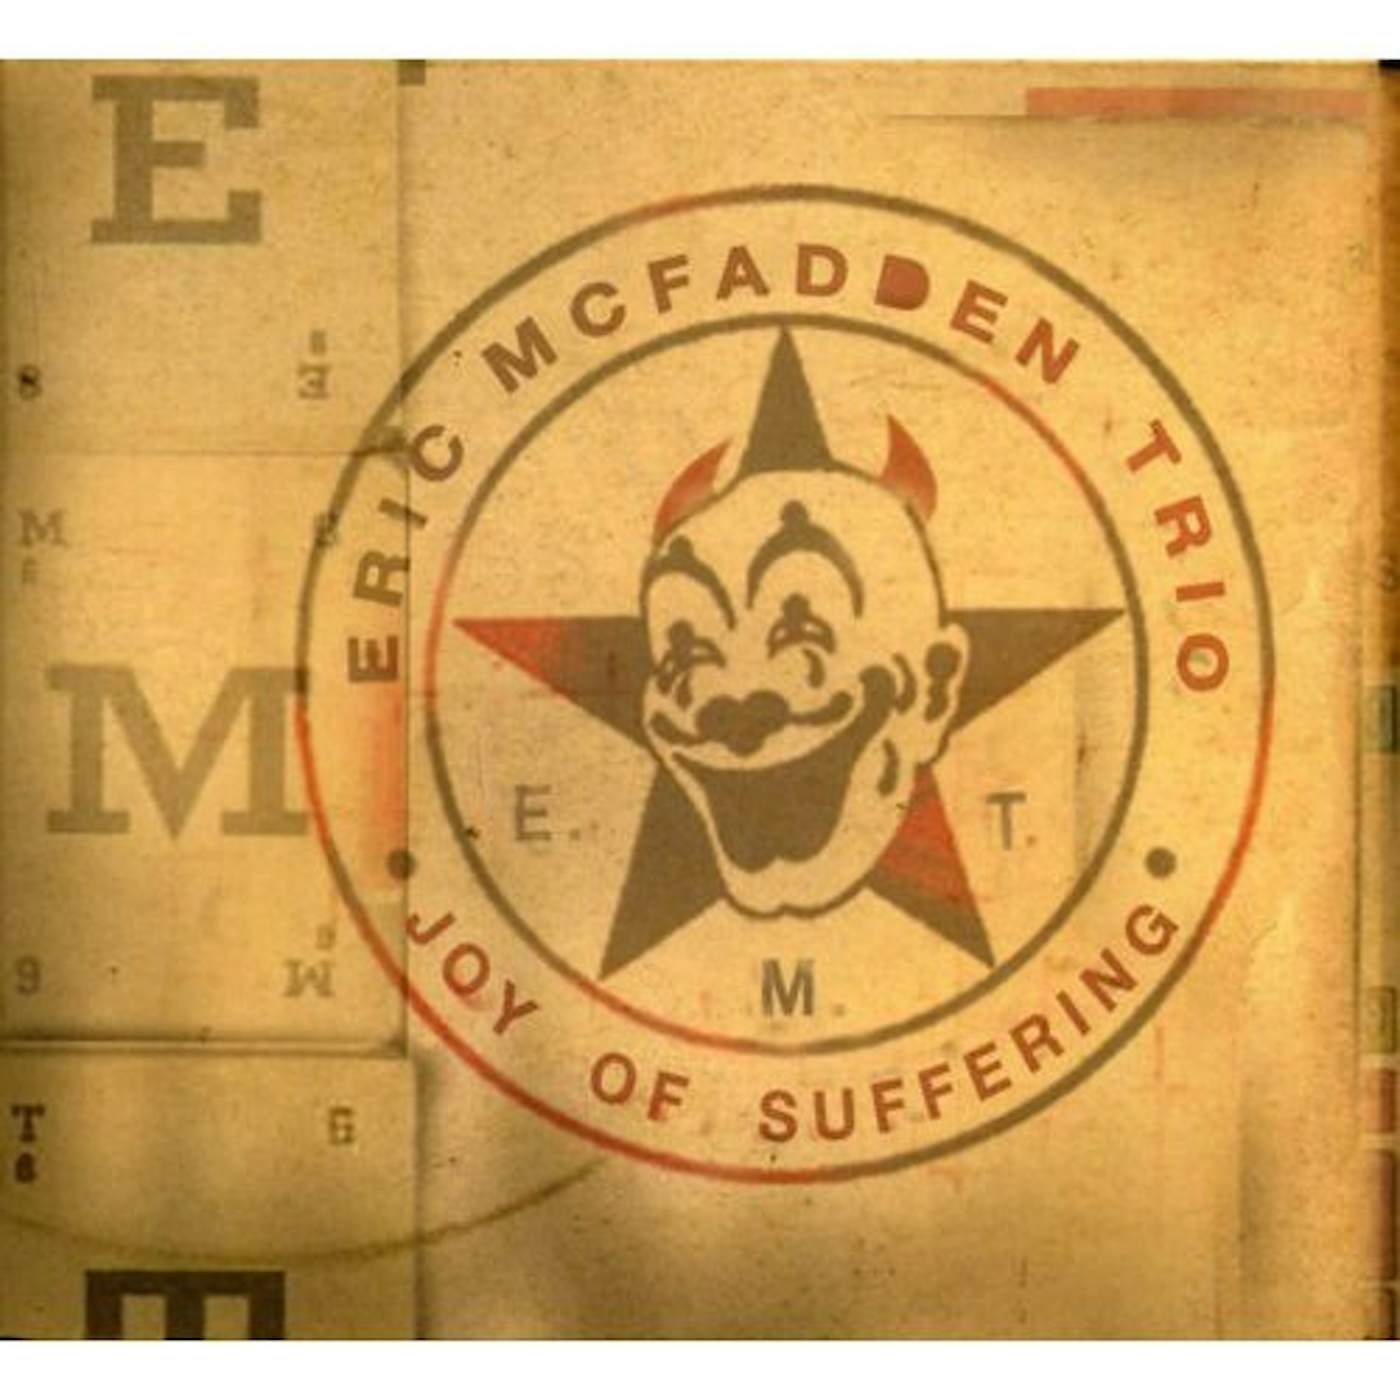 Eric McFadden JOY OF SUFFERING CD